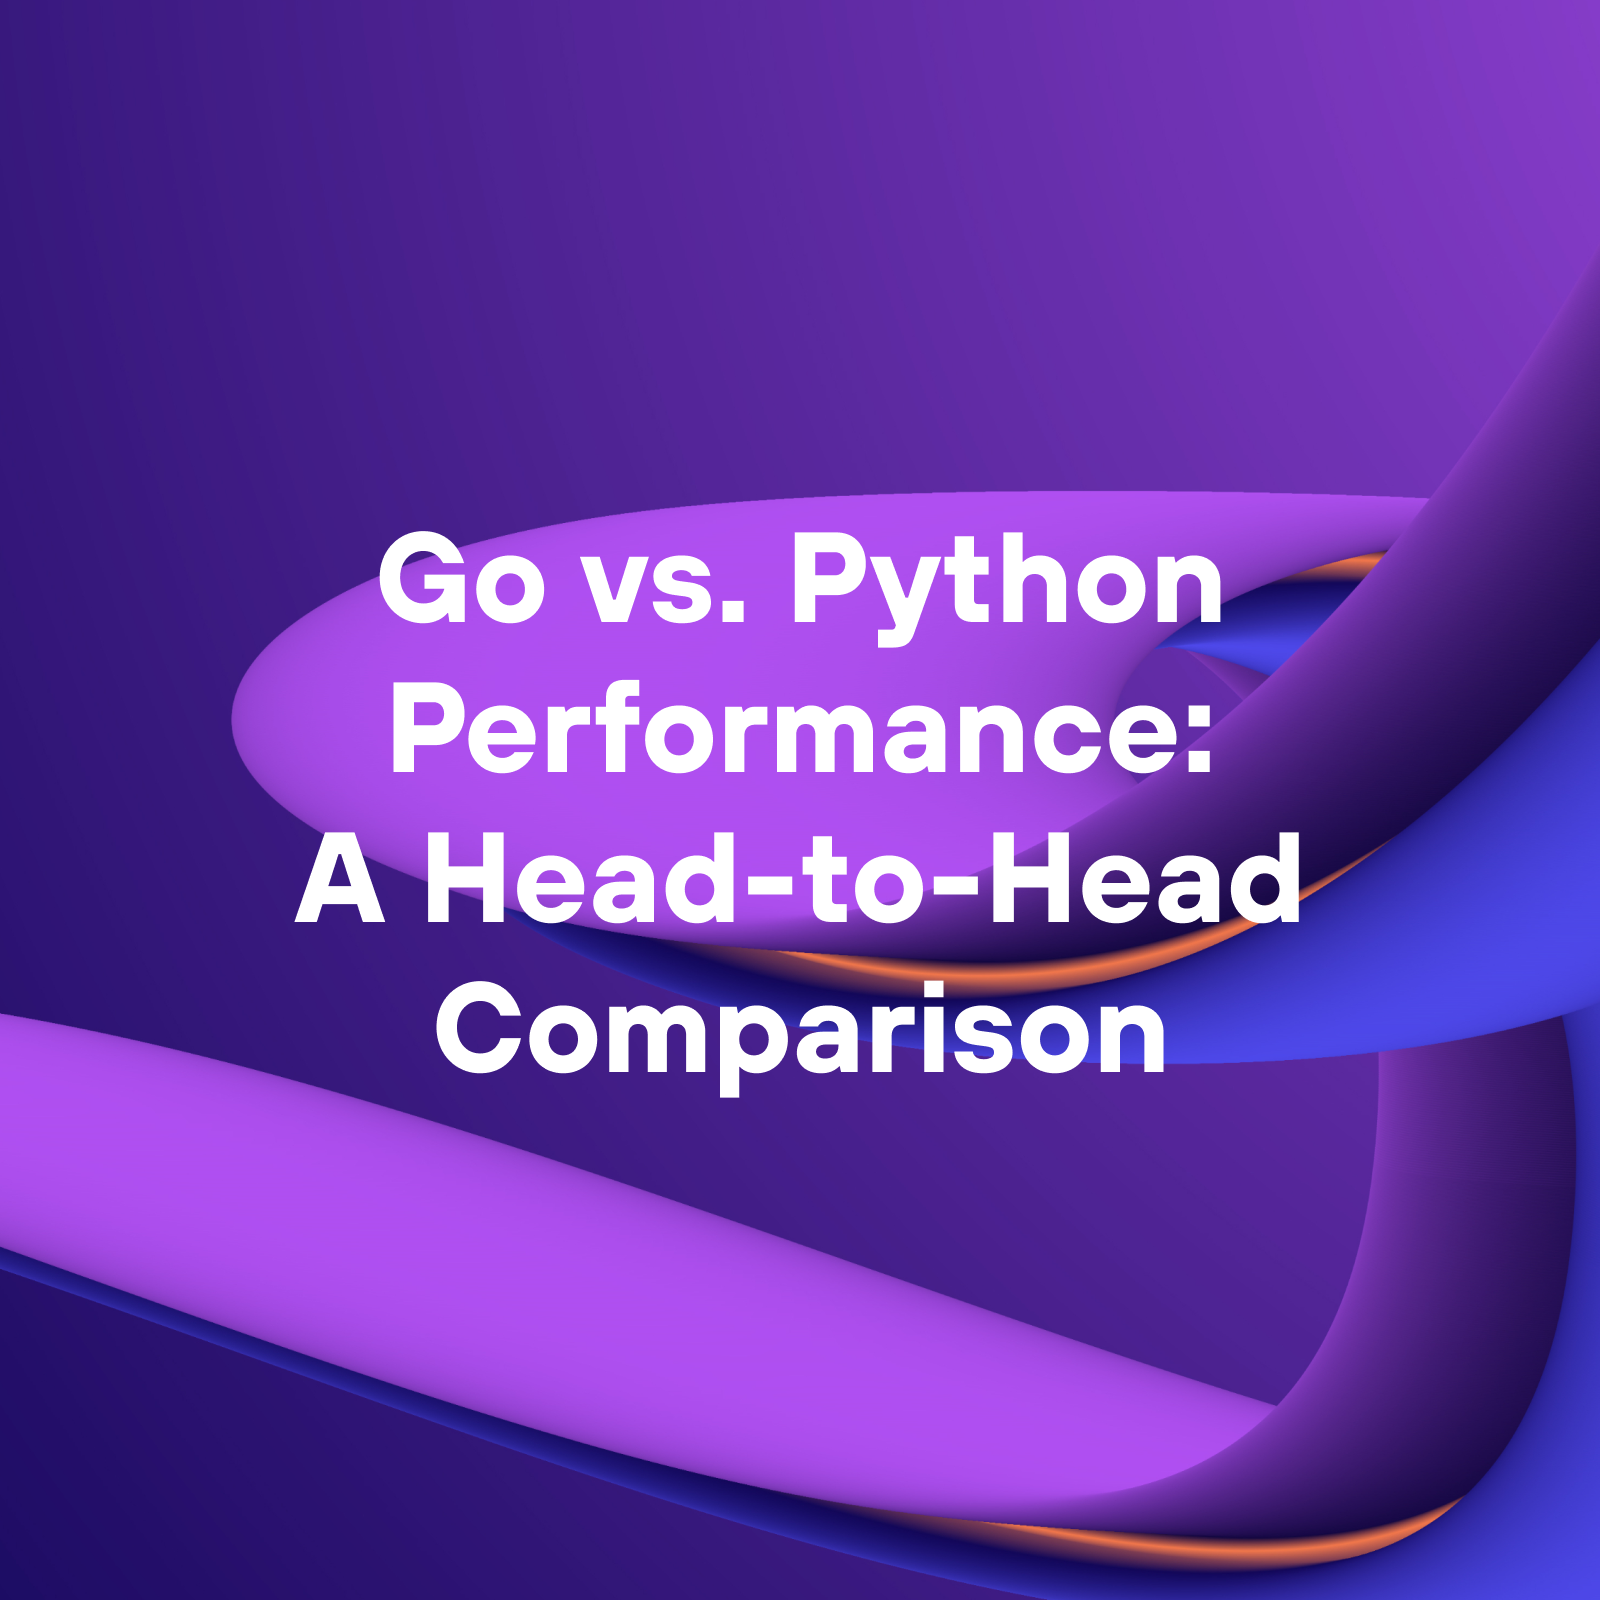 Go vs. Python Performance: A Head-to-Head Comparison